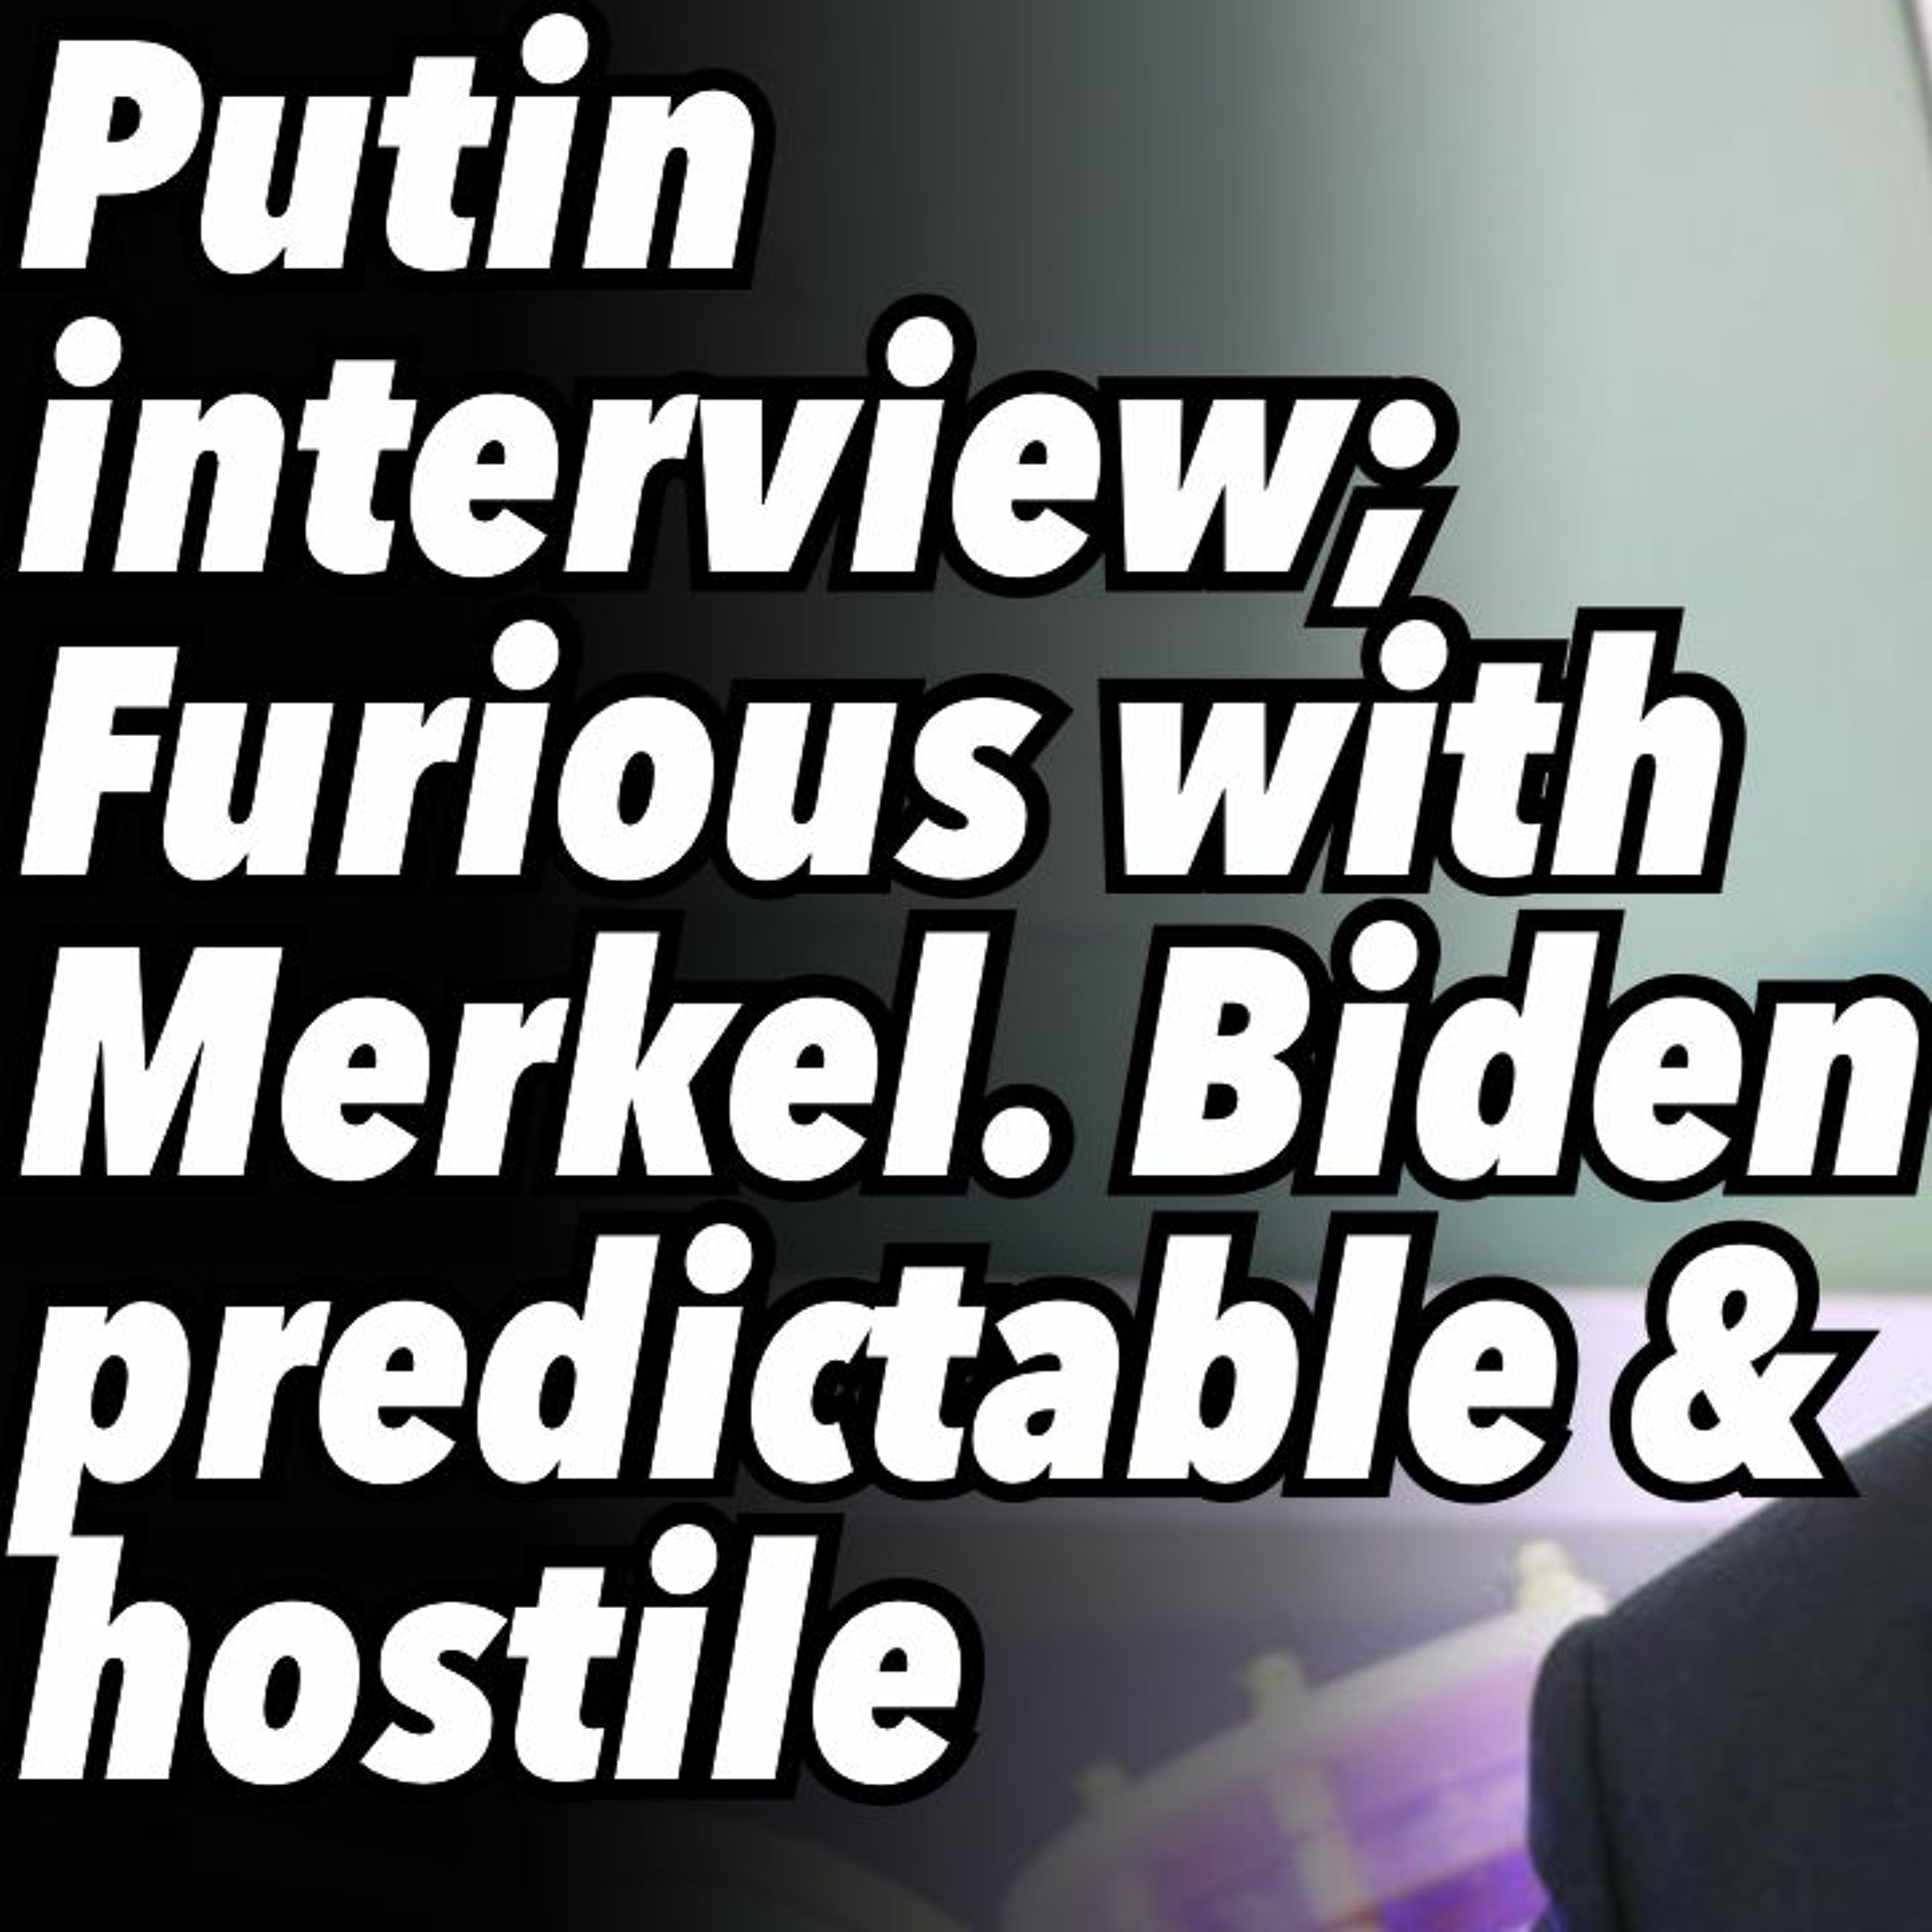 Putin interview; Furious with Merkel. Biden predictable and hostile